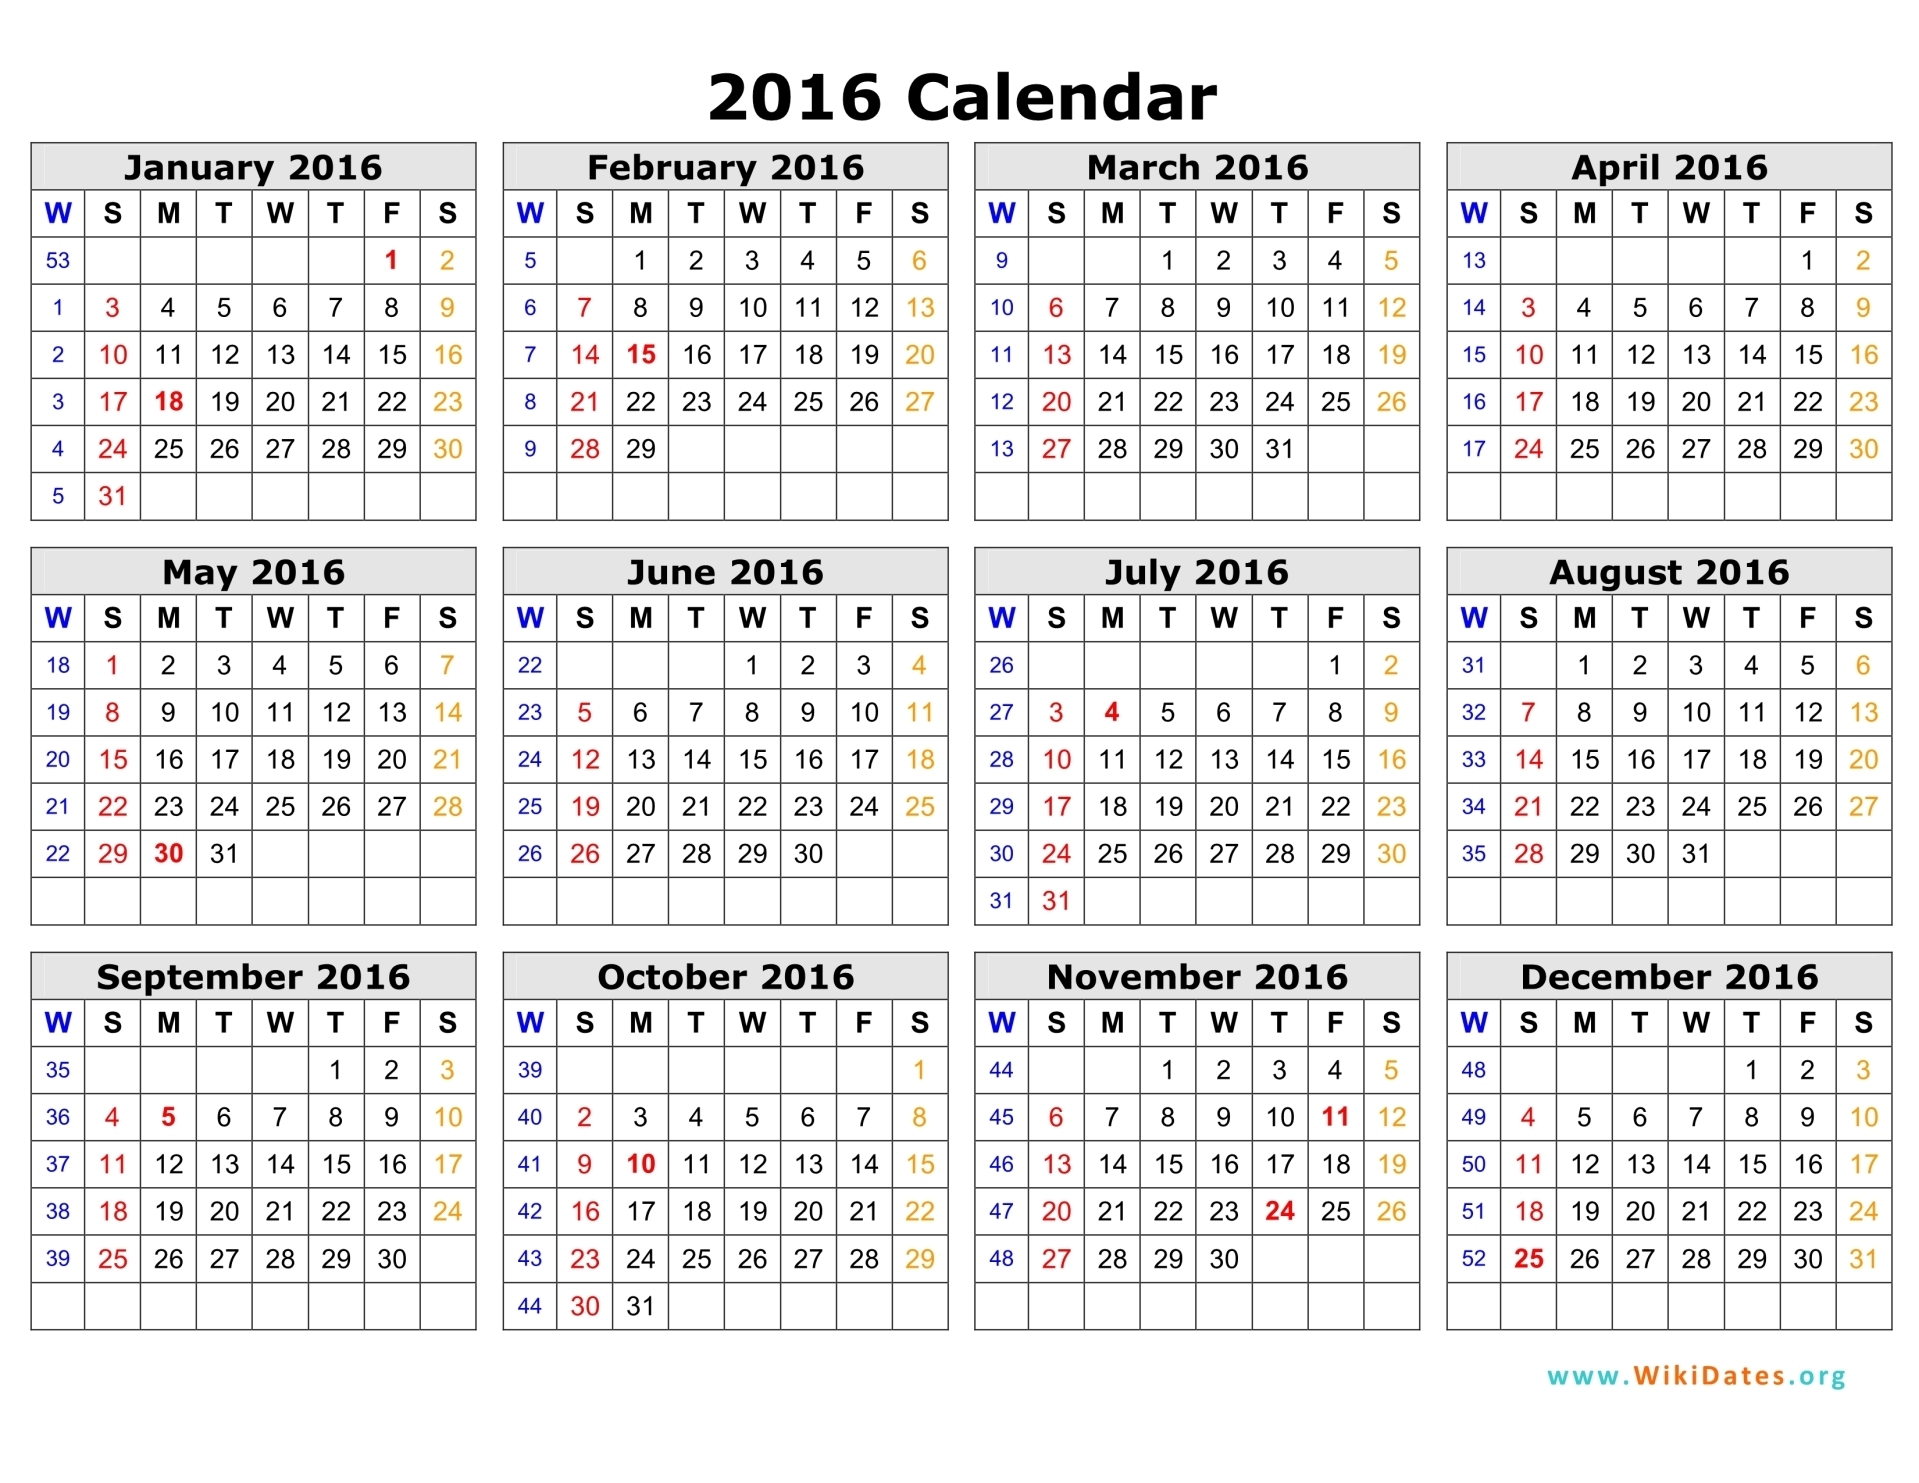 2016 Calendar WikiDates